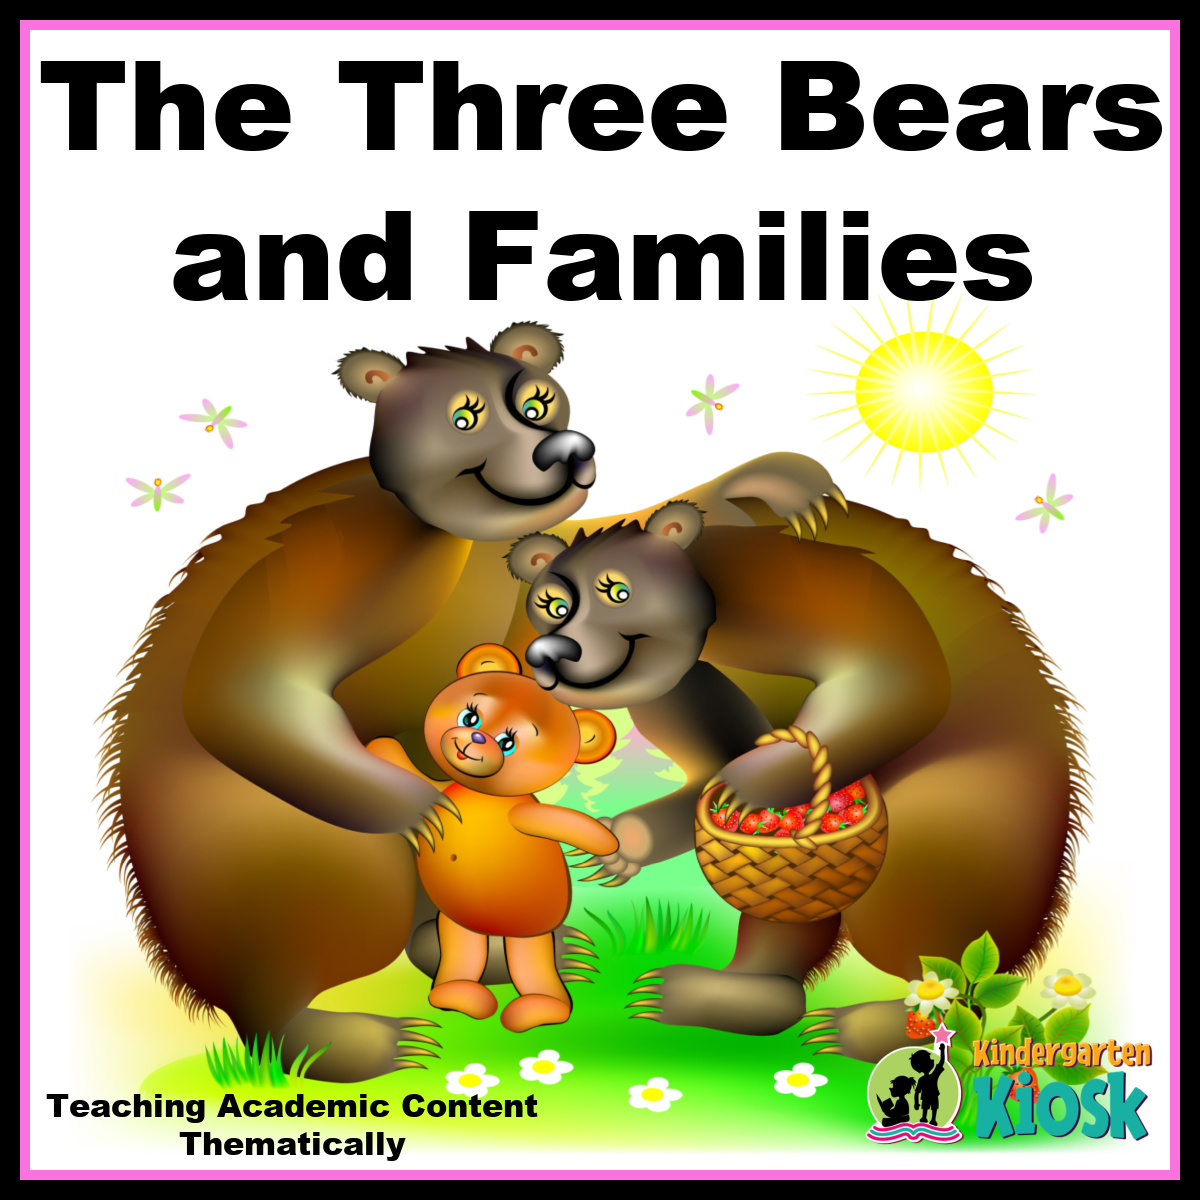 The Three Bears and Families — Kindergarten Kiosk